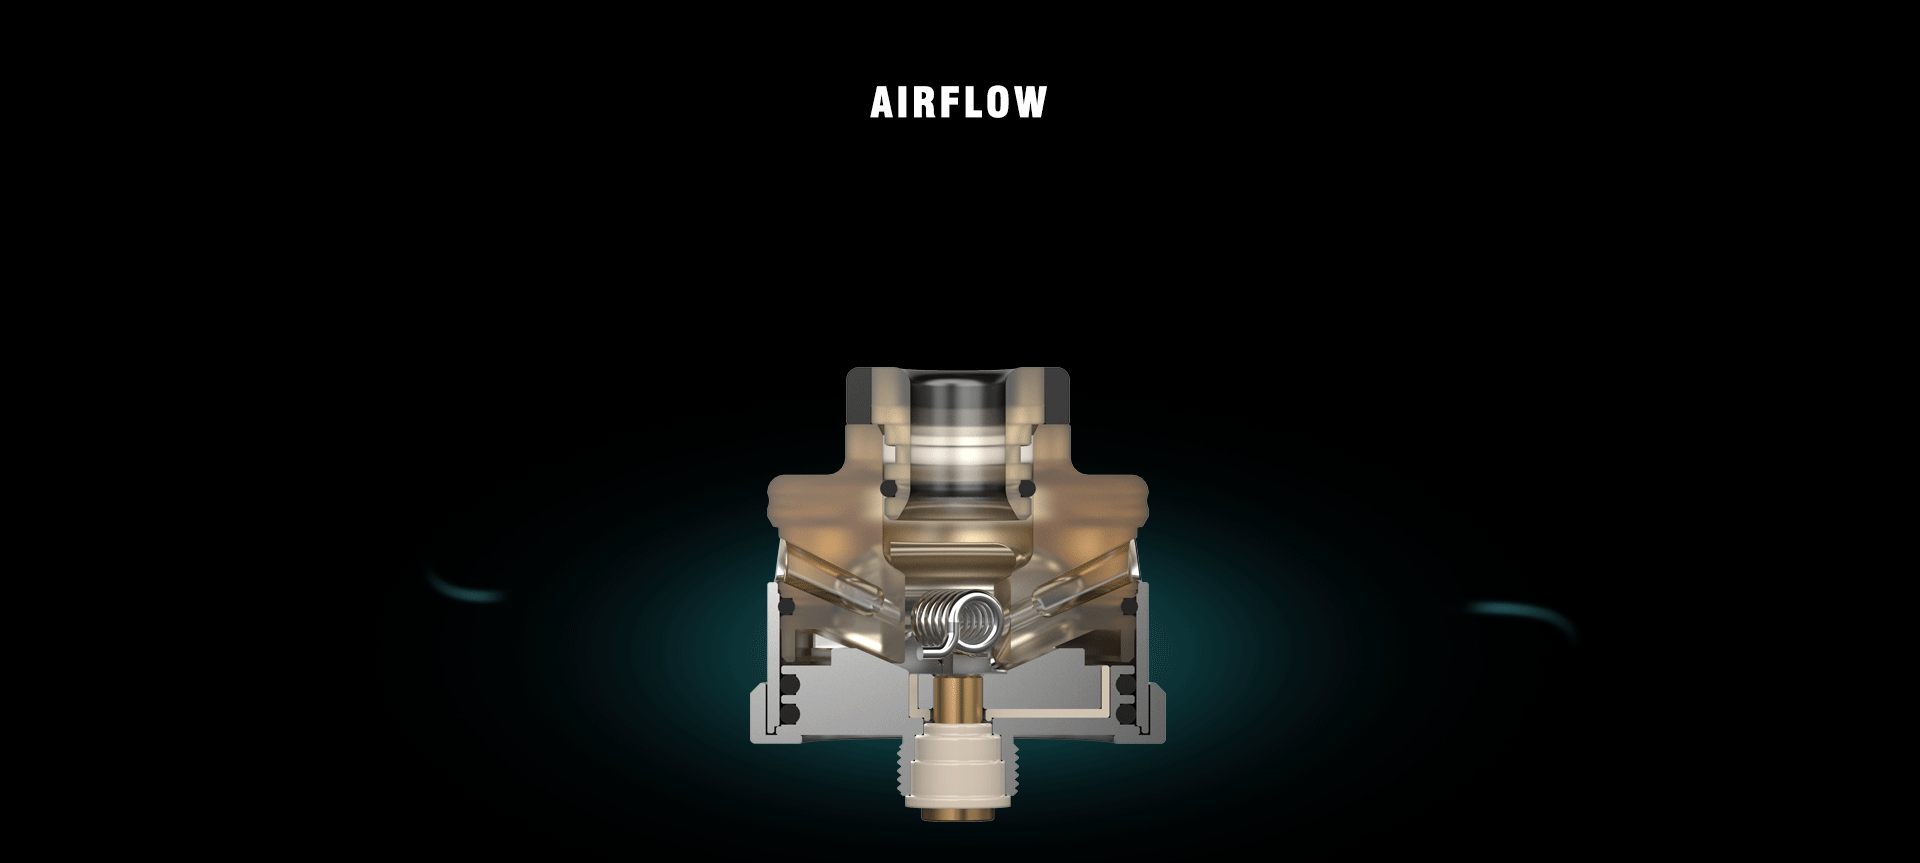 Requiem RDA Airflow design